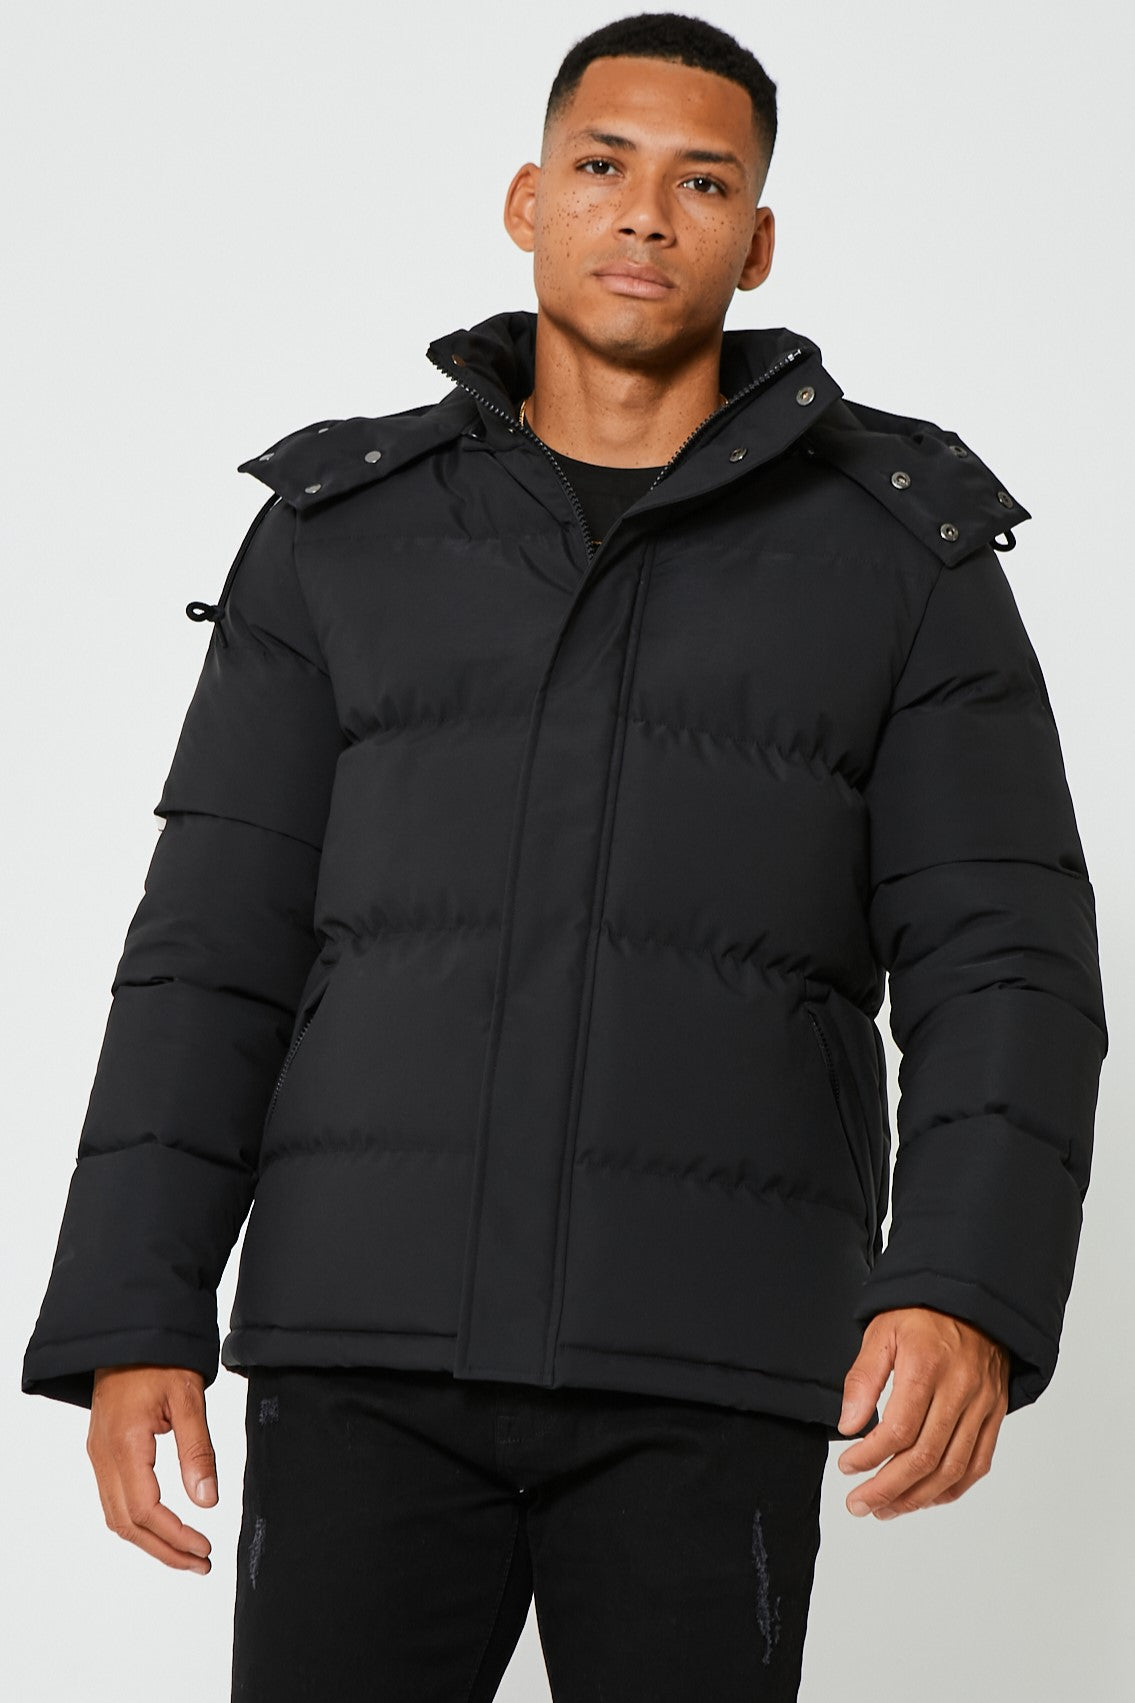 Michael Kors Men's Hooded Puffer Jacket, Created For Macy's - Macy's